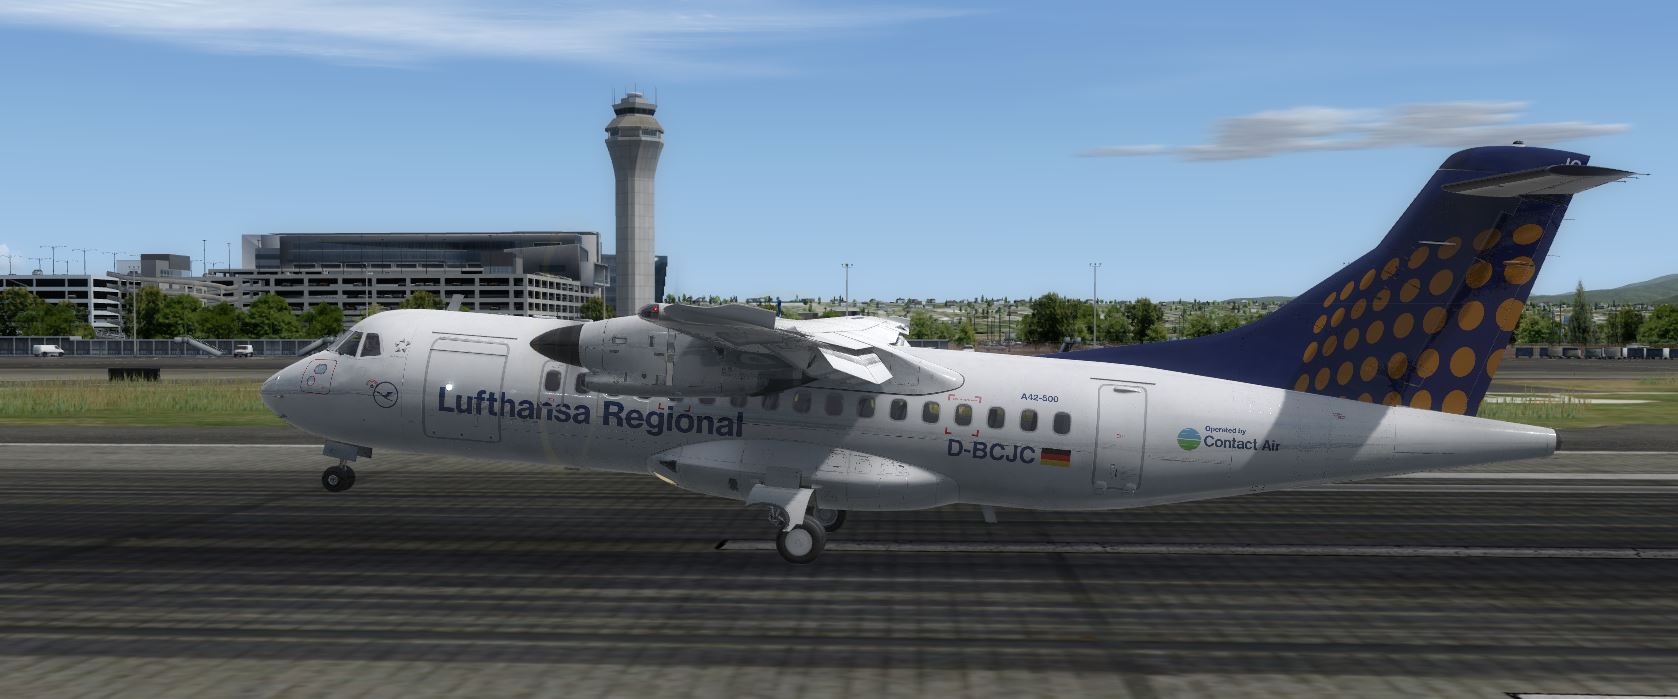 ATR42-500 Lufthansa-8372 